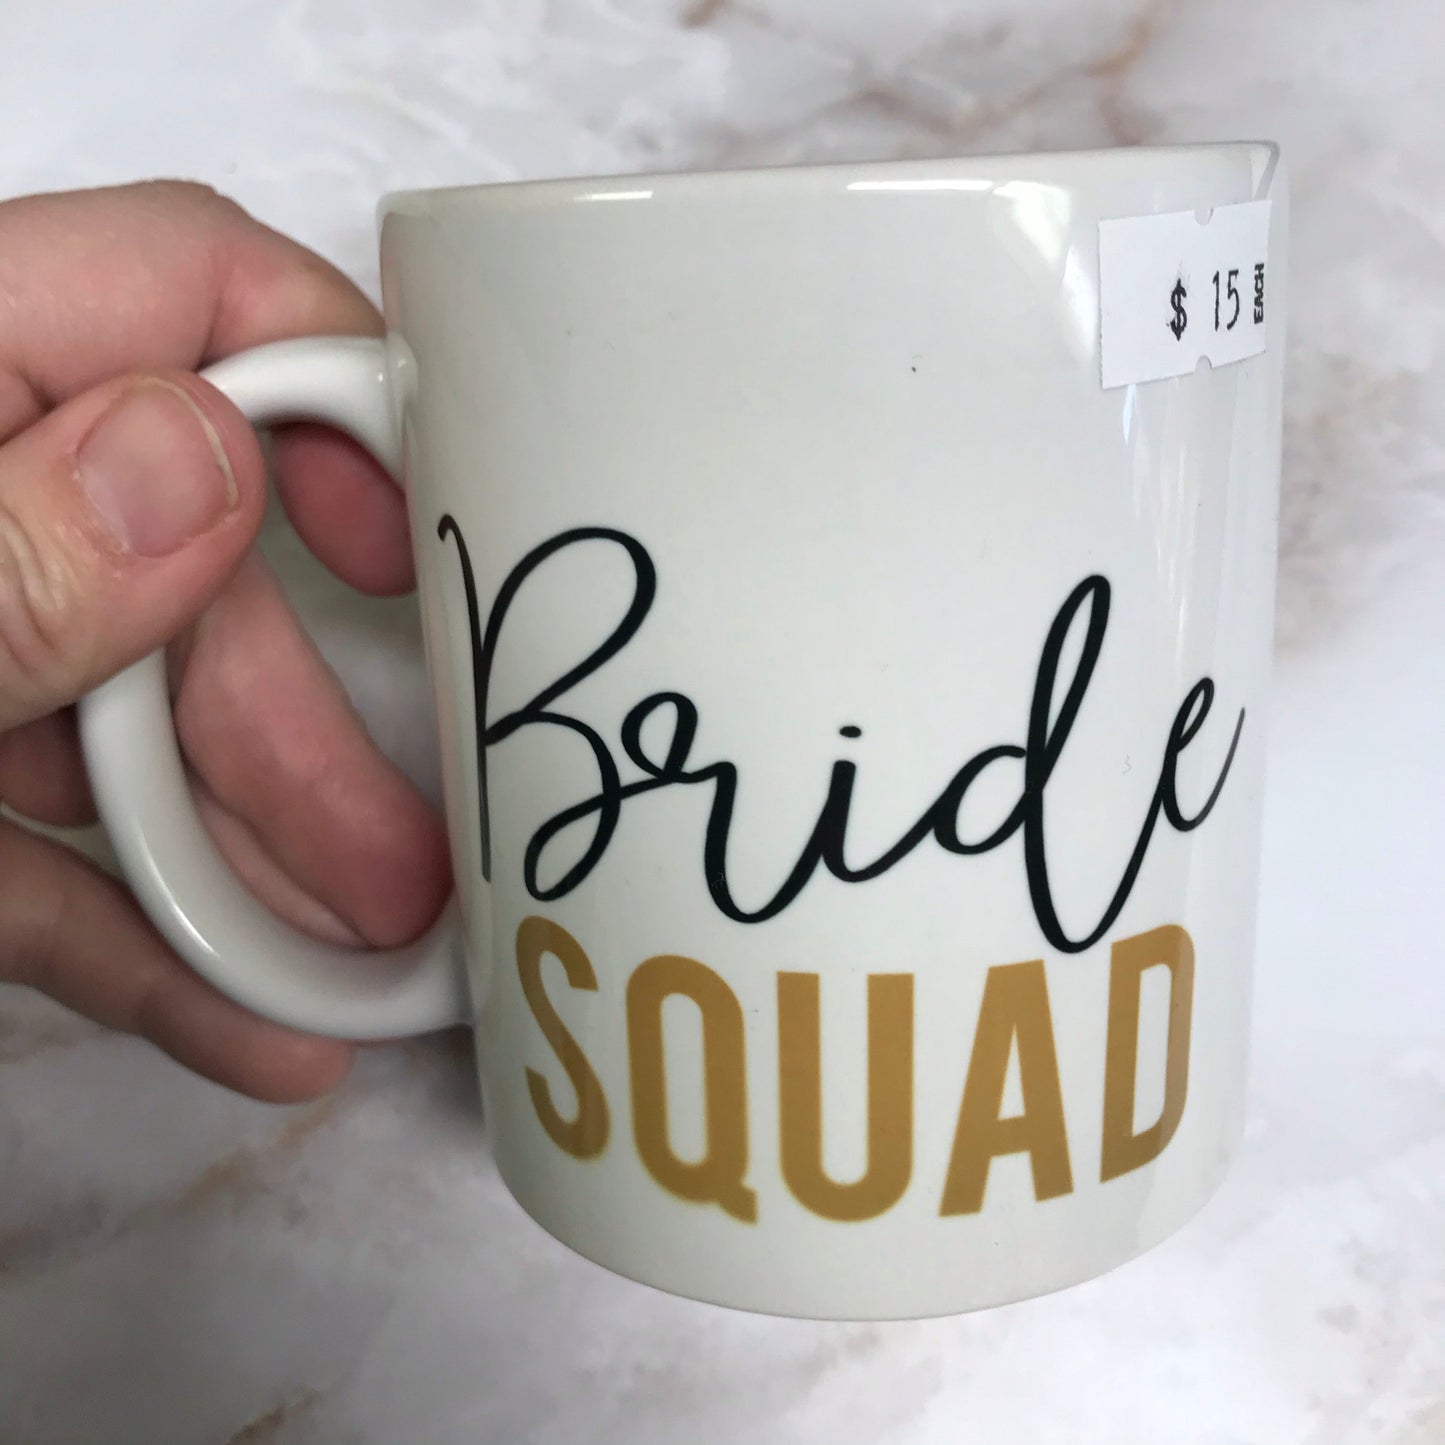 Bride Squad mug